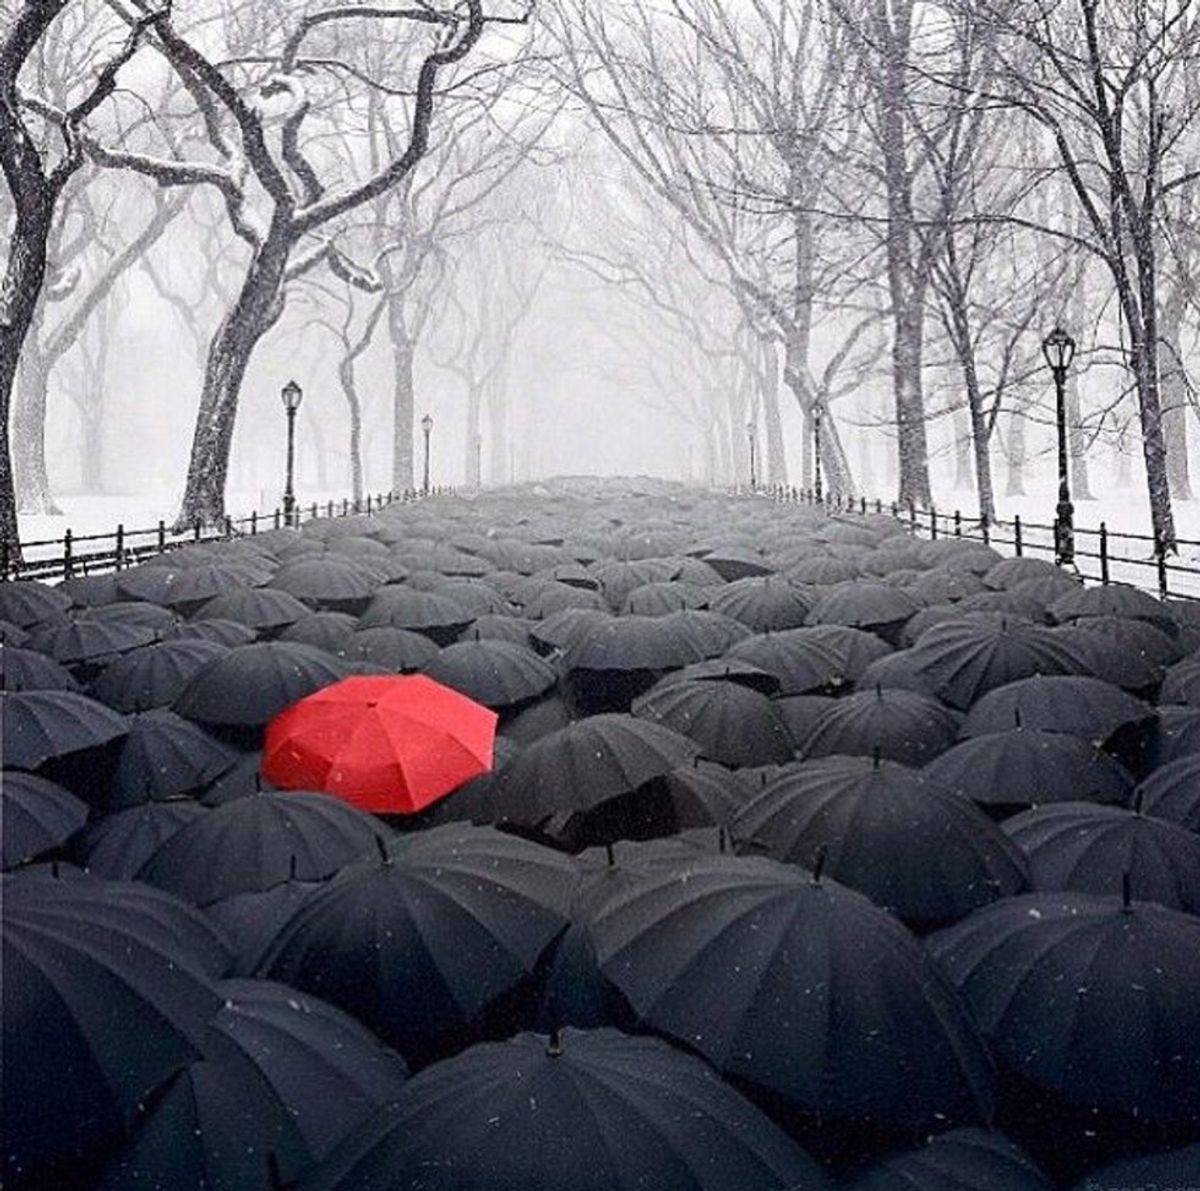 The Umbrella, A Horror Story